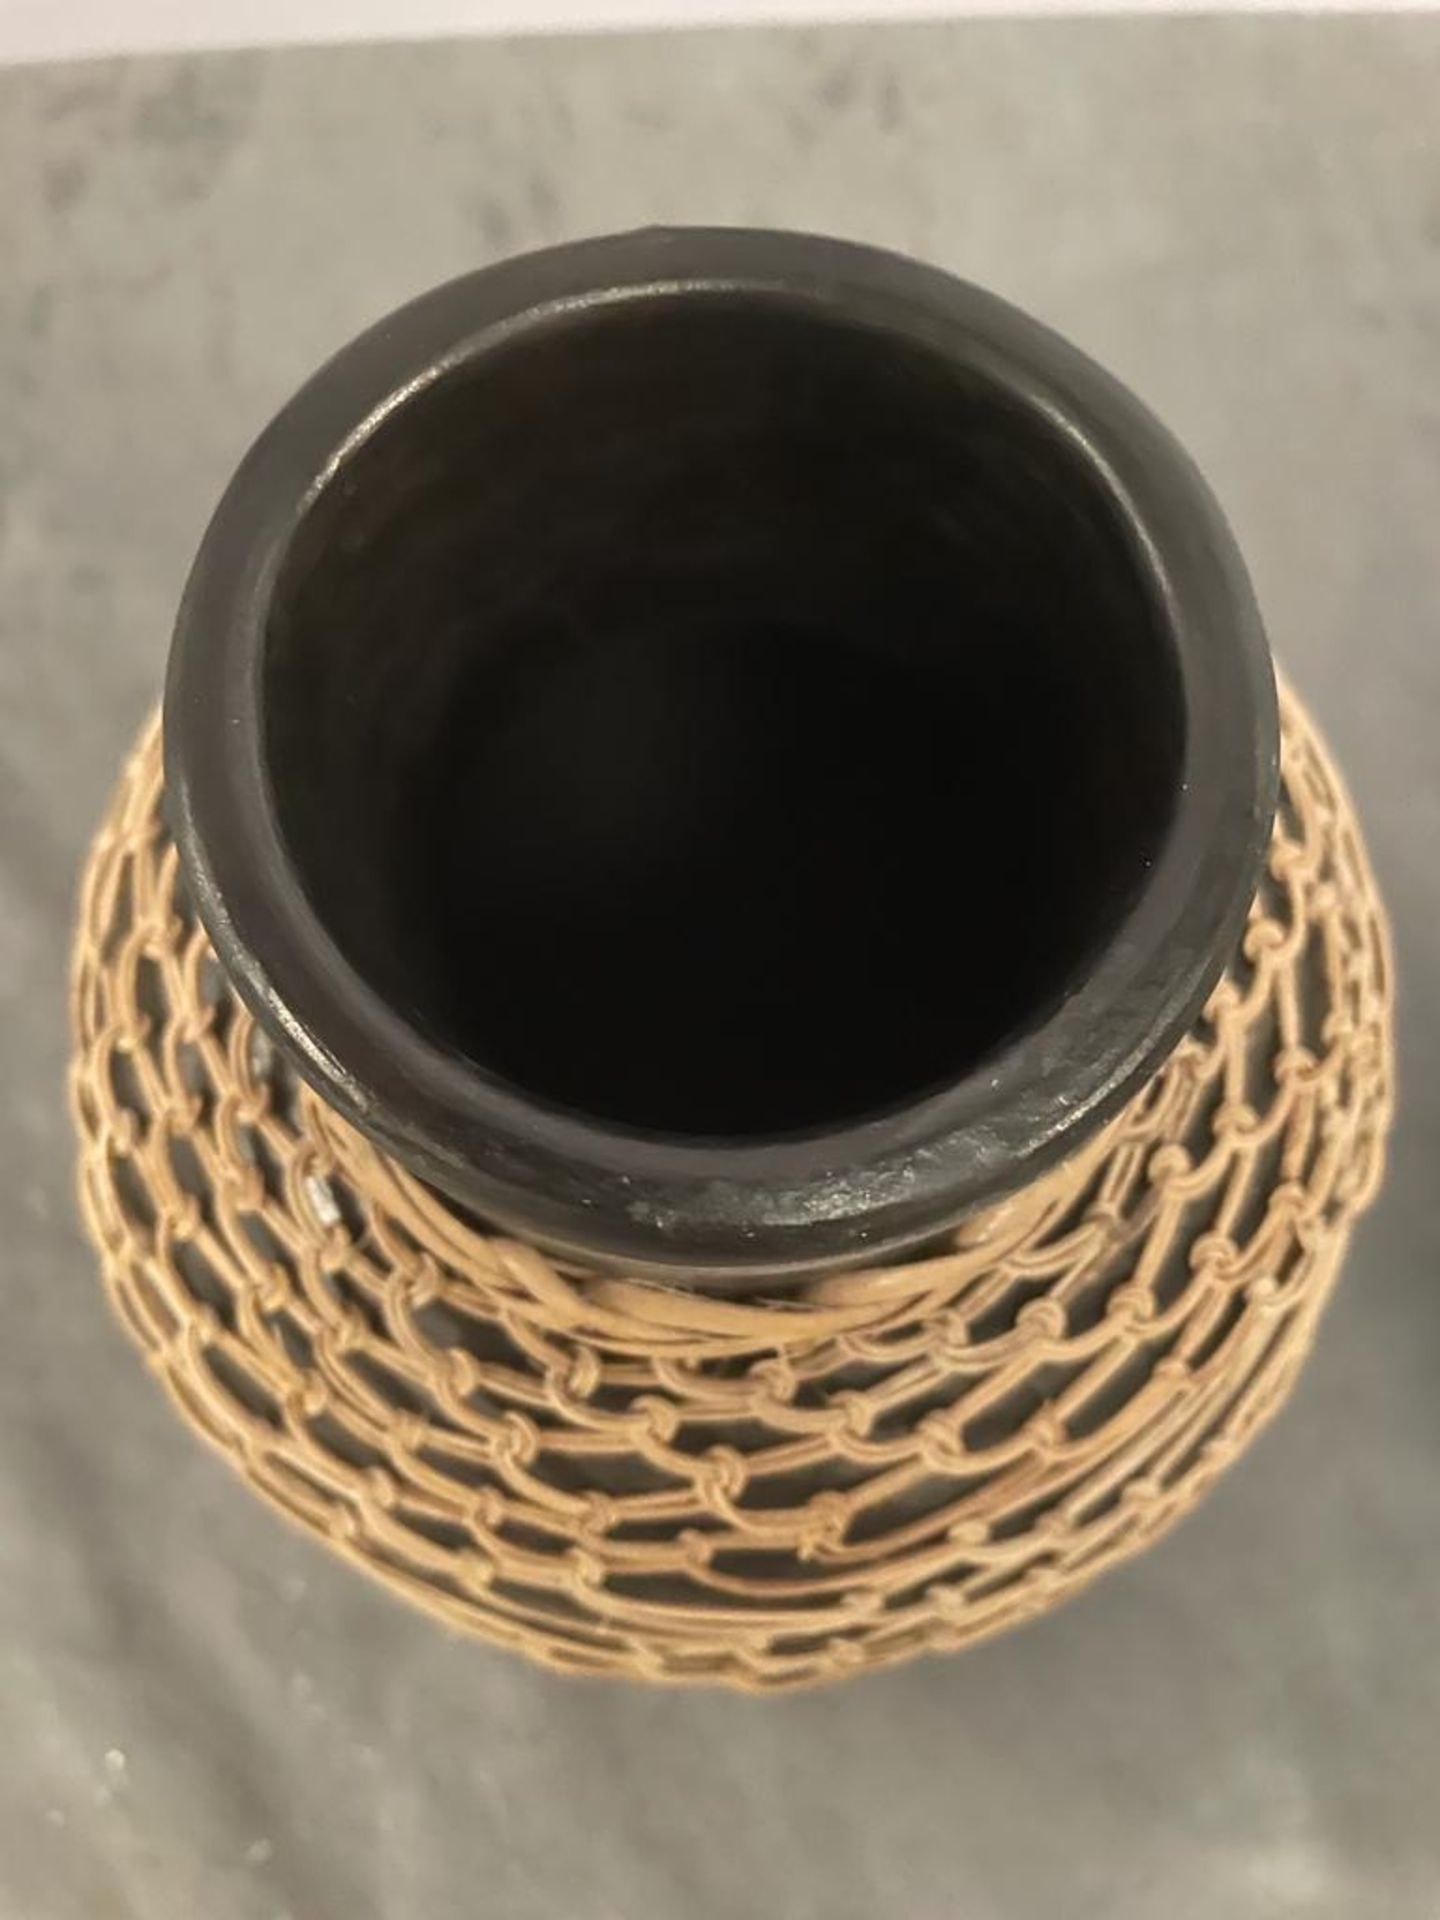 Lene Bjerre Black Vase 17cm High ( CP1294) - Image 2 of 3